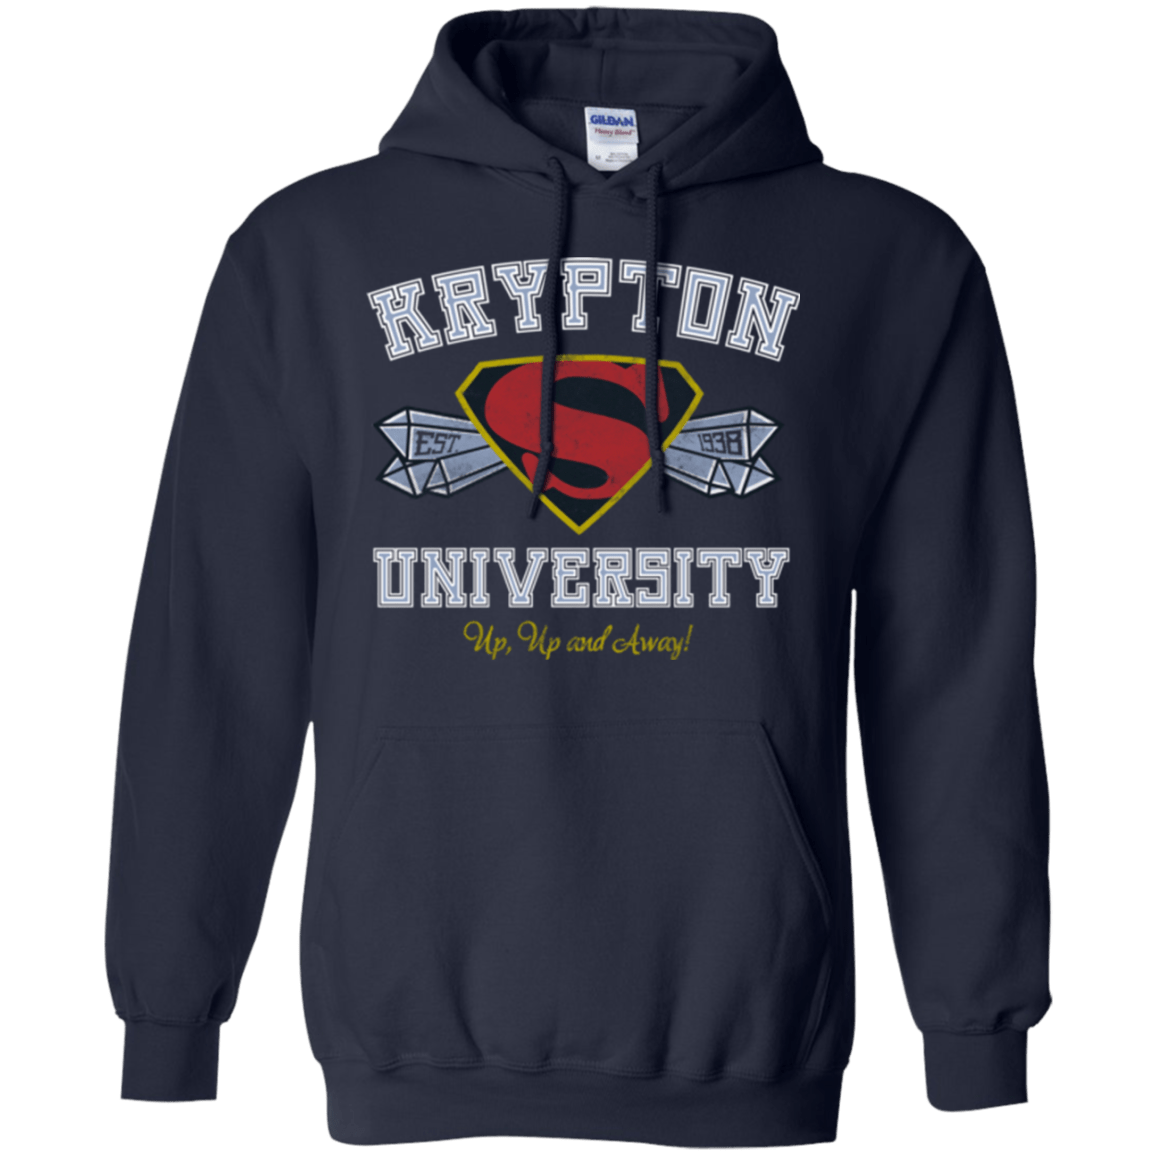 Sweatshirts Navy / Small Krypton University Pullover Hoodie